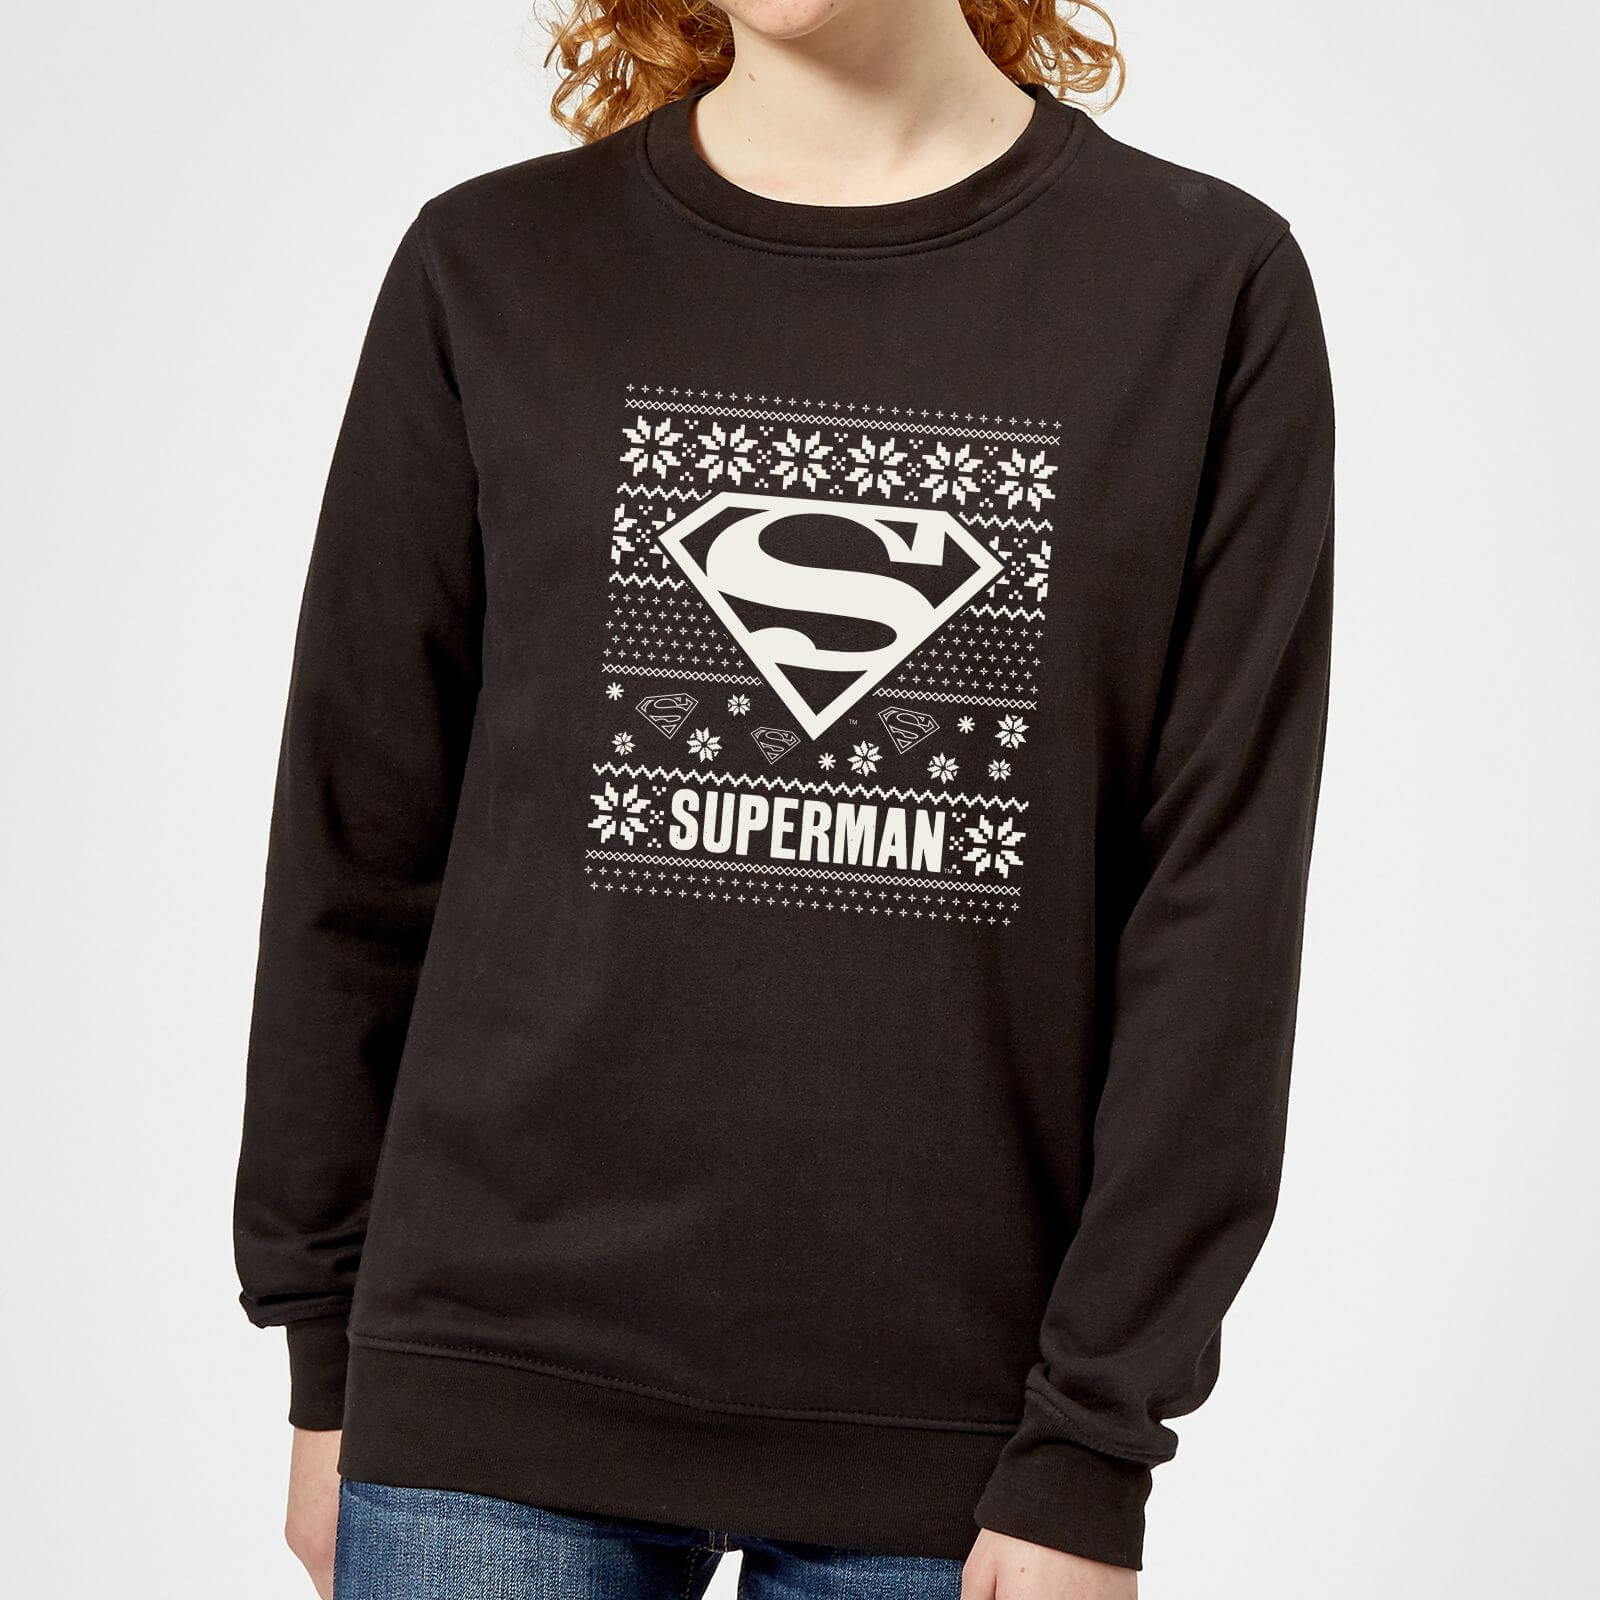 DC Superman Knit Pattern Women's Christmas Jumper - Black - L - Black